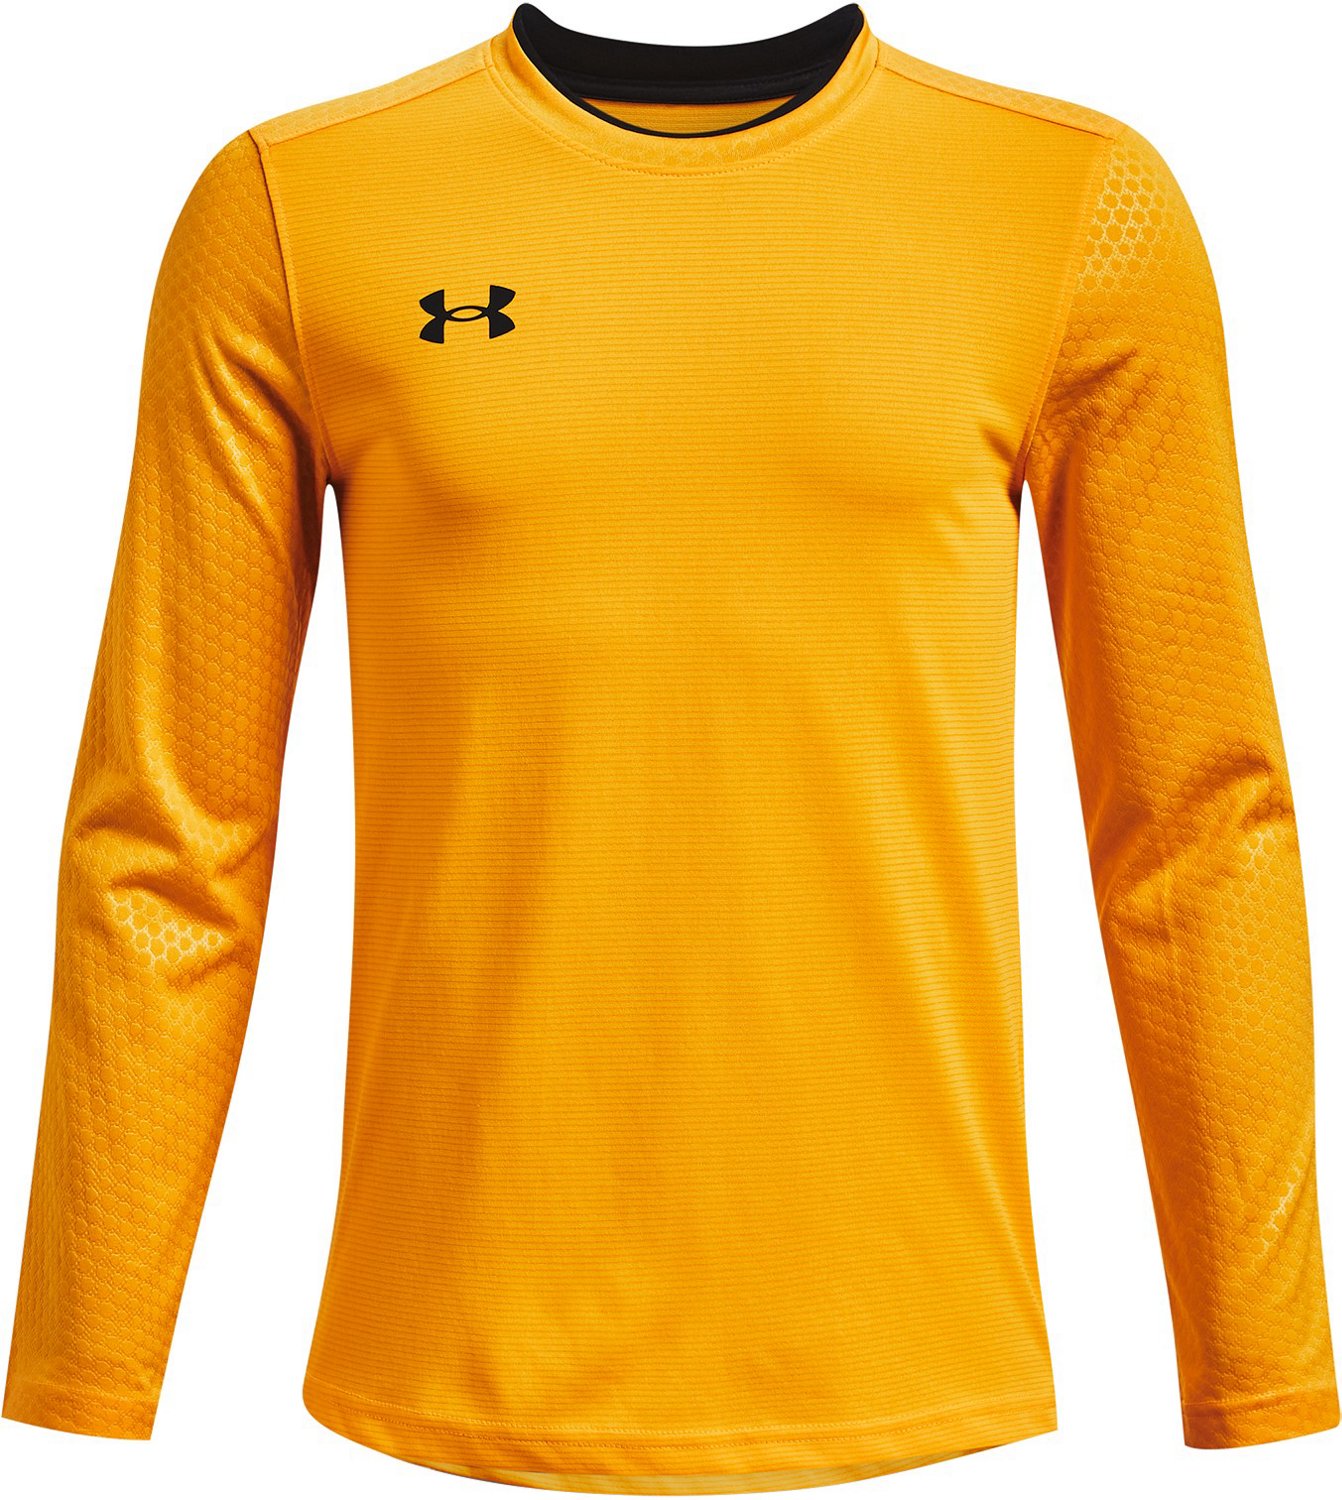 Flying Fish - Customized Adult Goalkeeper Long Sleeve Soccer Jersey -XTeamwear